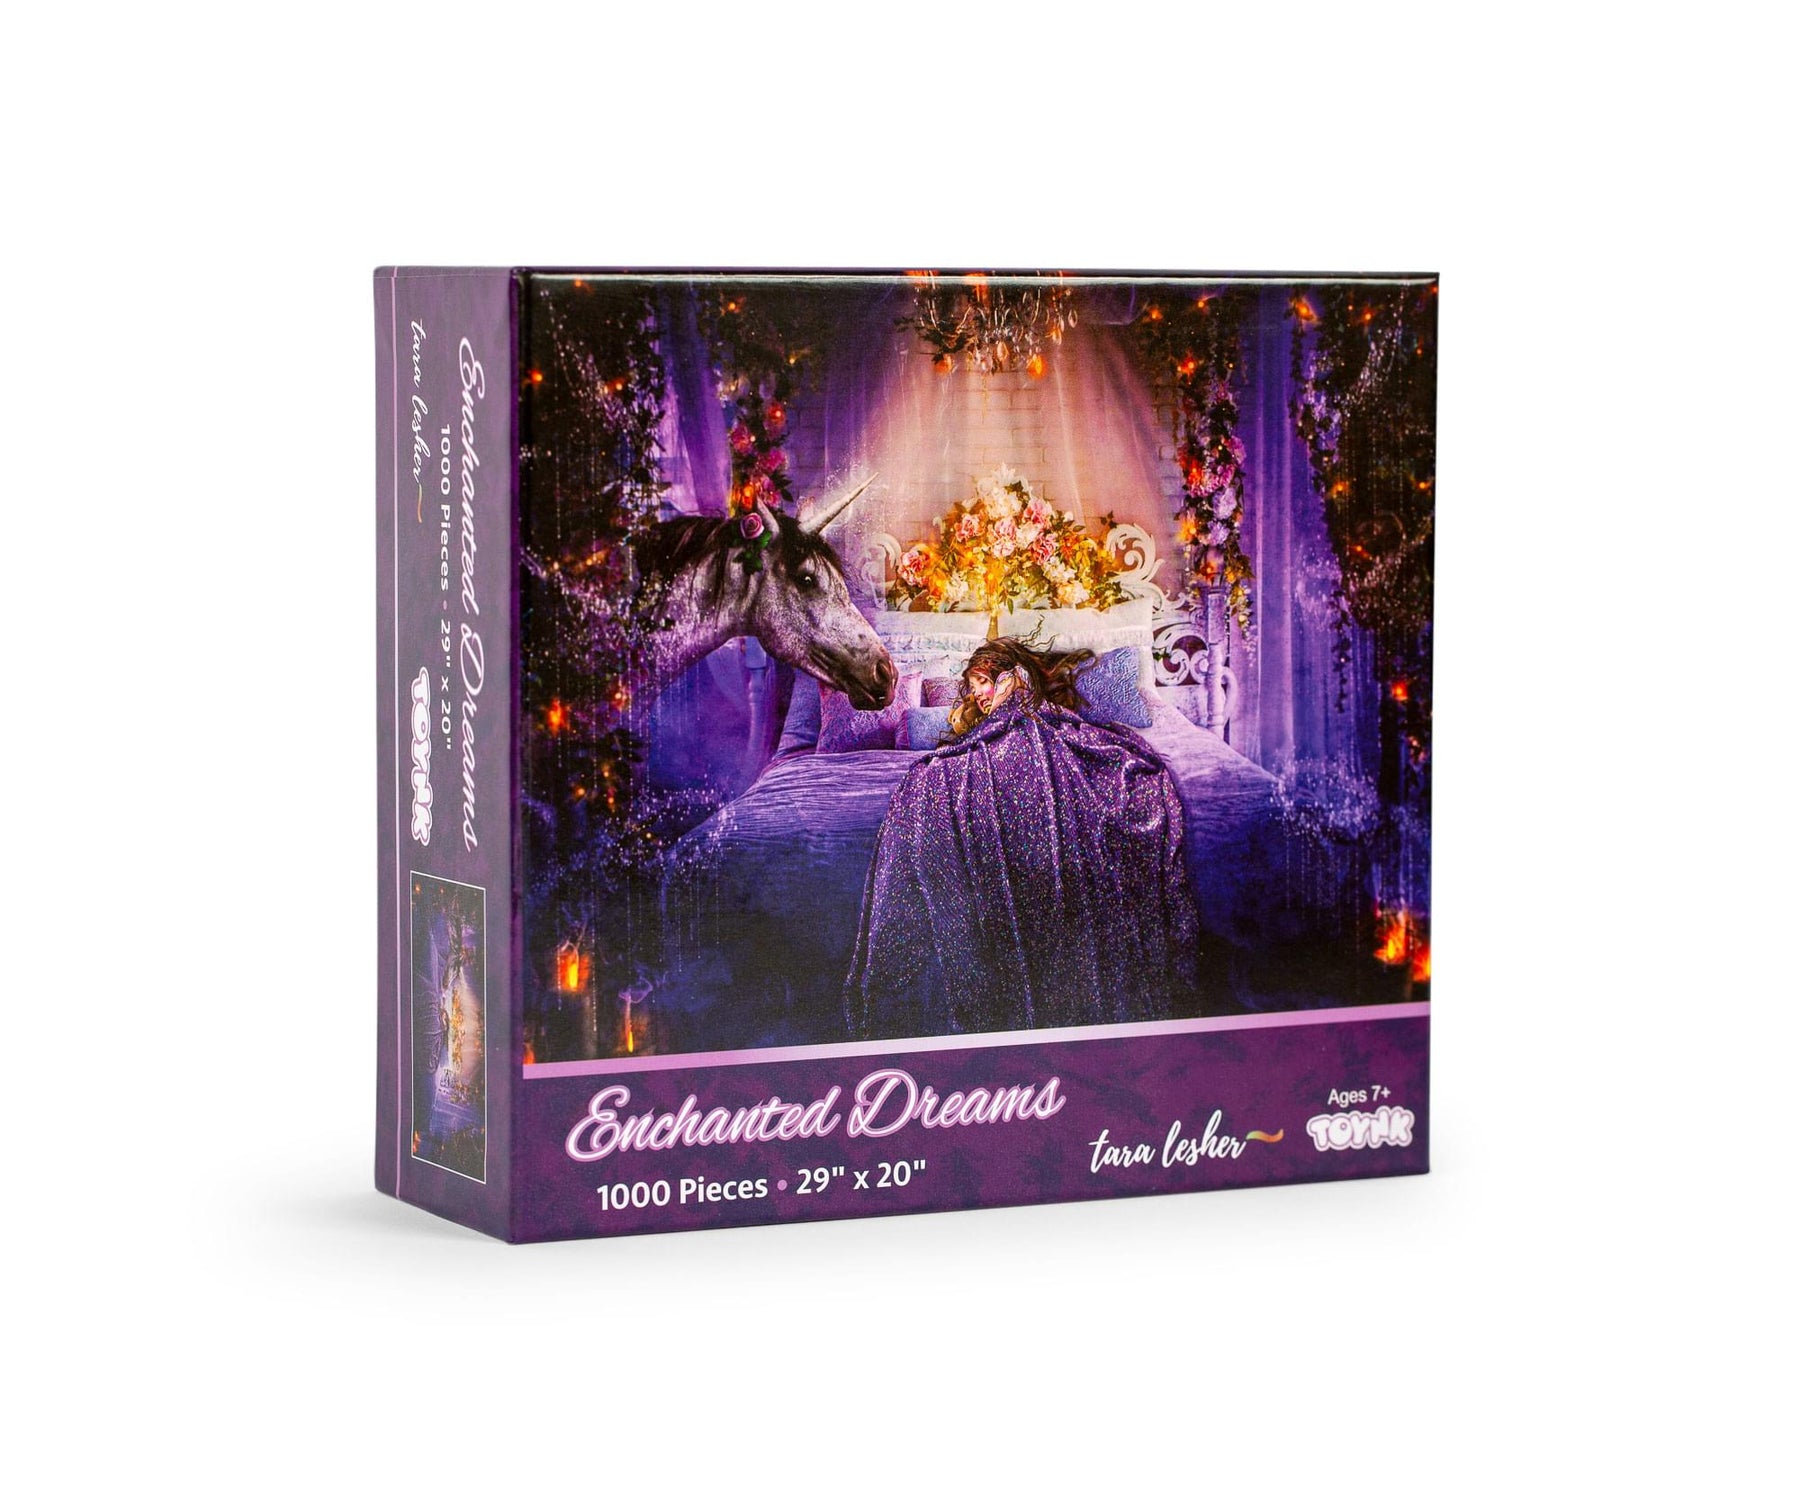 Enchanted Dreams Fantasy Puzzle By Tara Lesher | 1000 Piece Jigsaw Puzzle